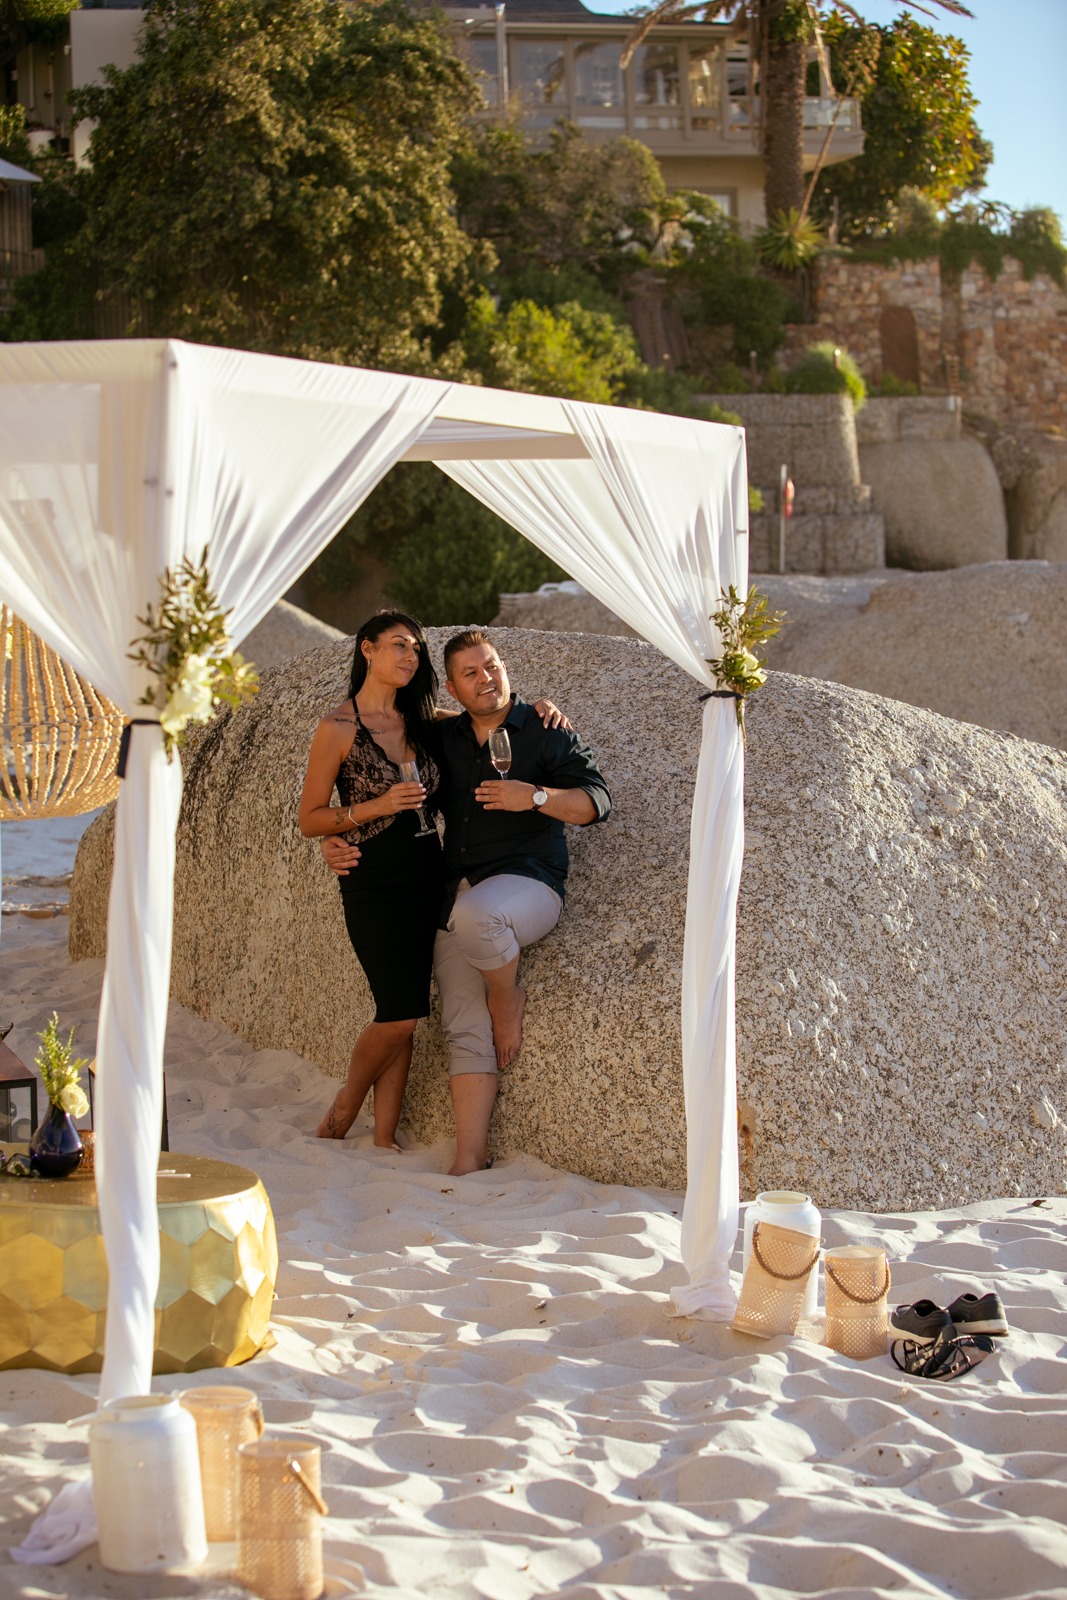 Sergio and Claudia Greek beach proposal